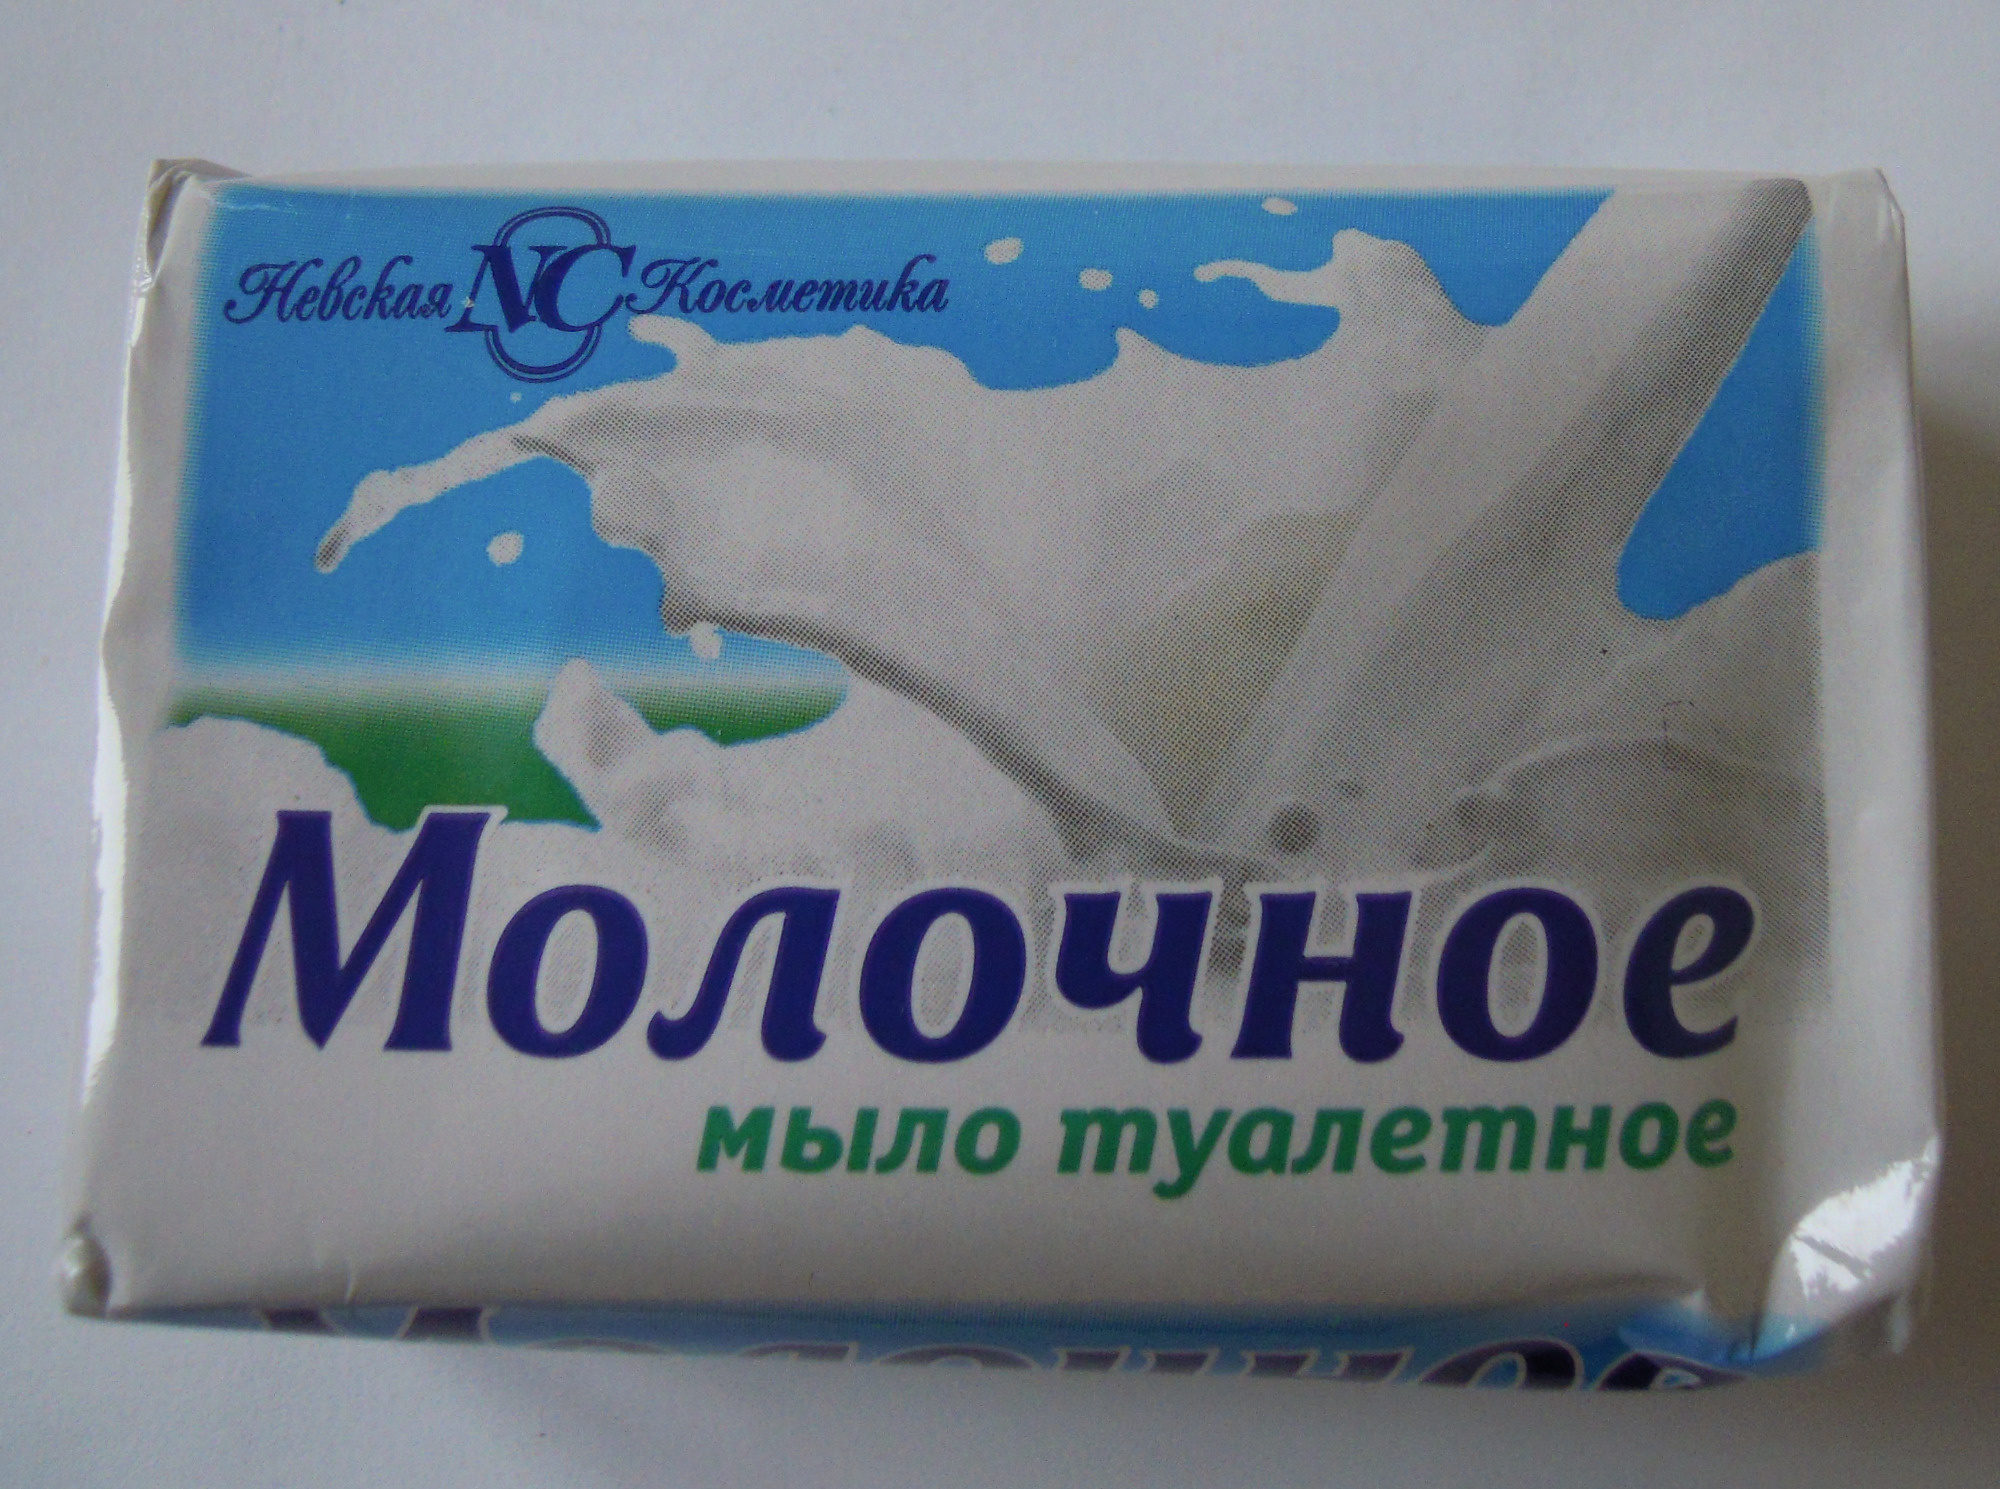 Молочное - Product - ru